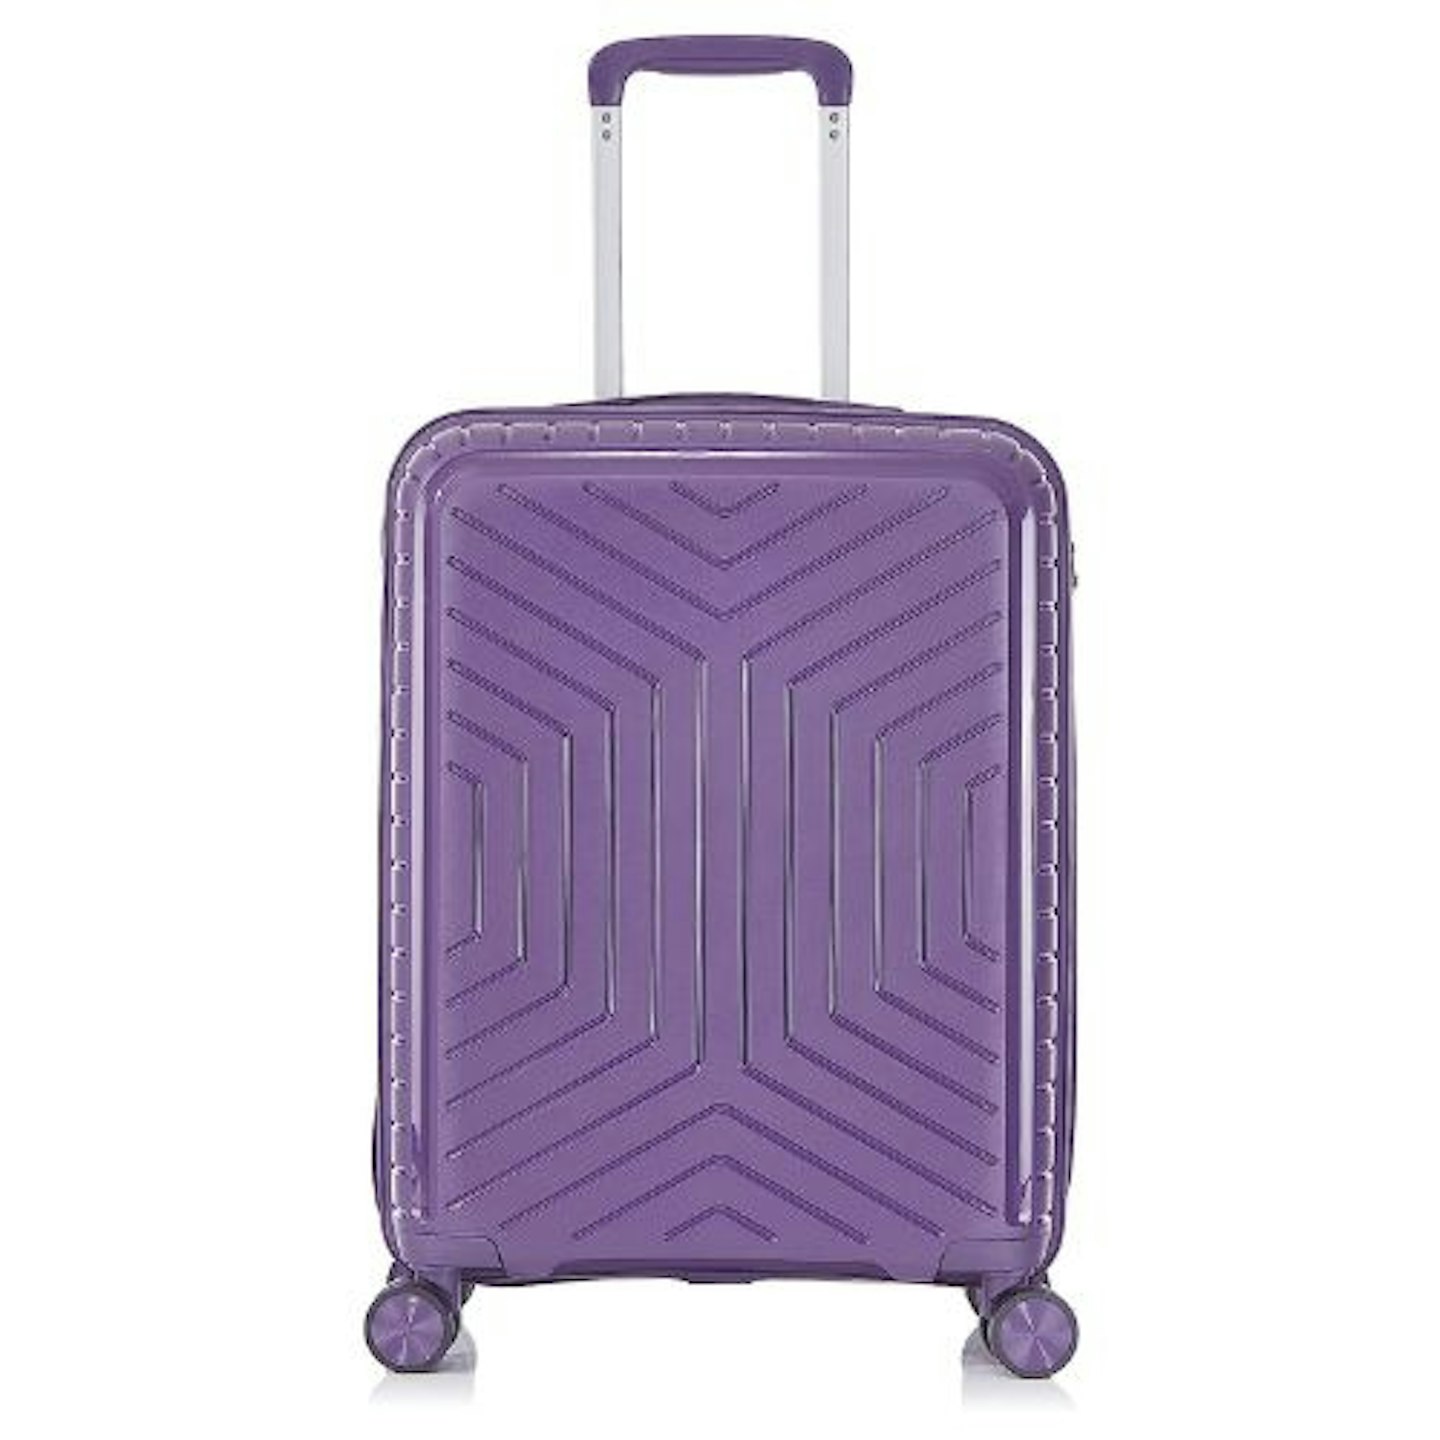 DK Luggage 20” Cabin Bag